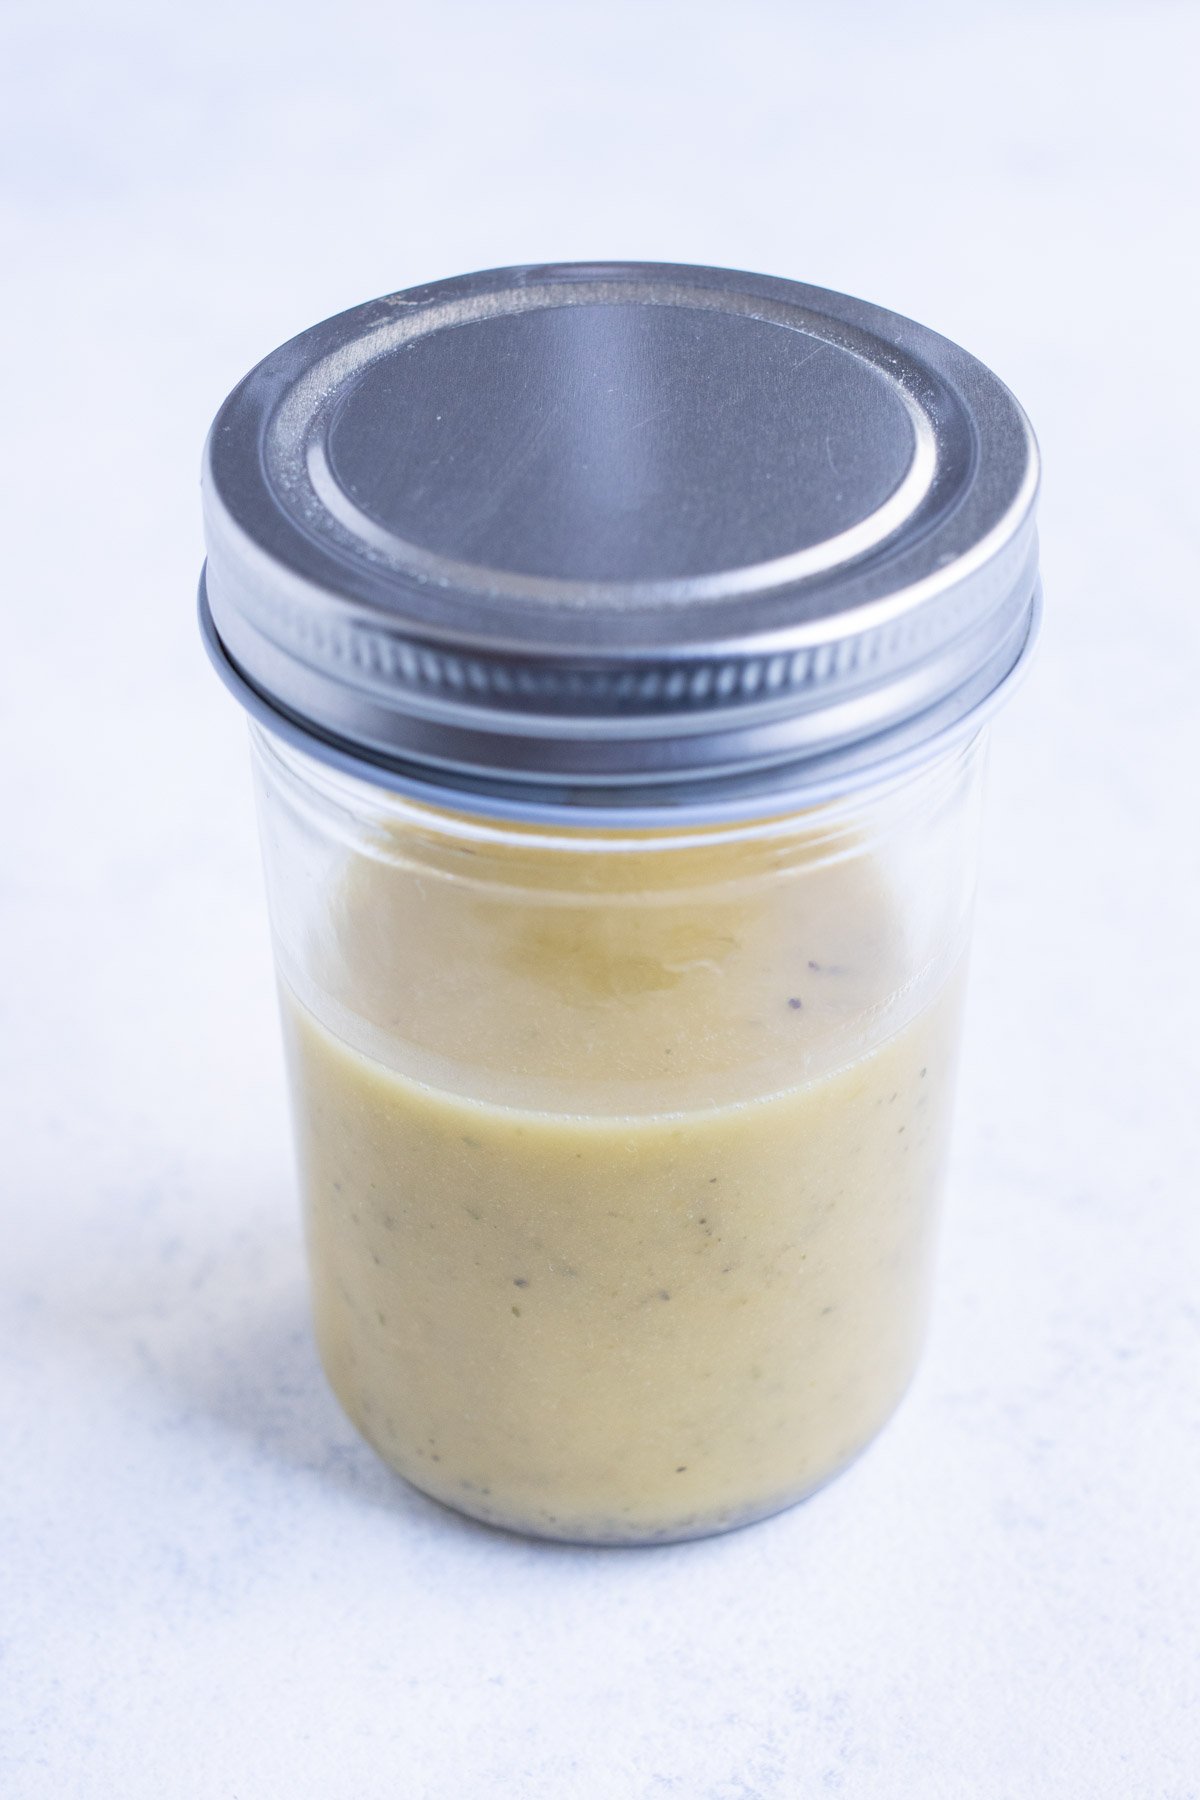 Greek salad dressing is stored in an air tight jar.